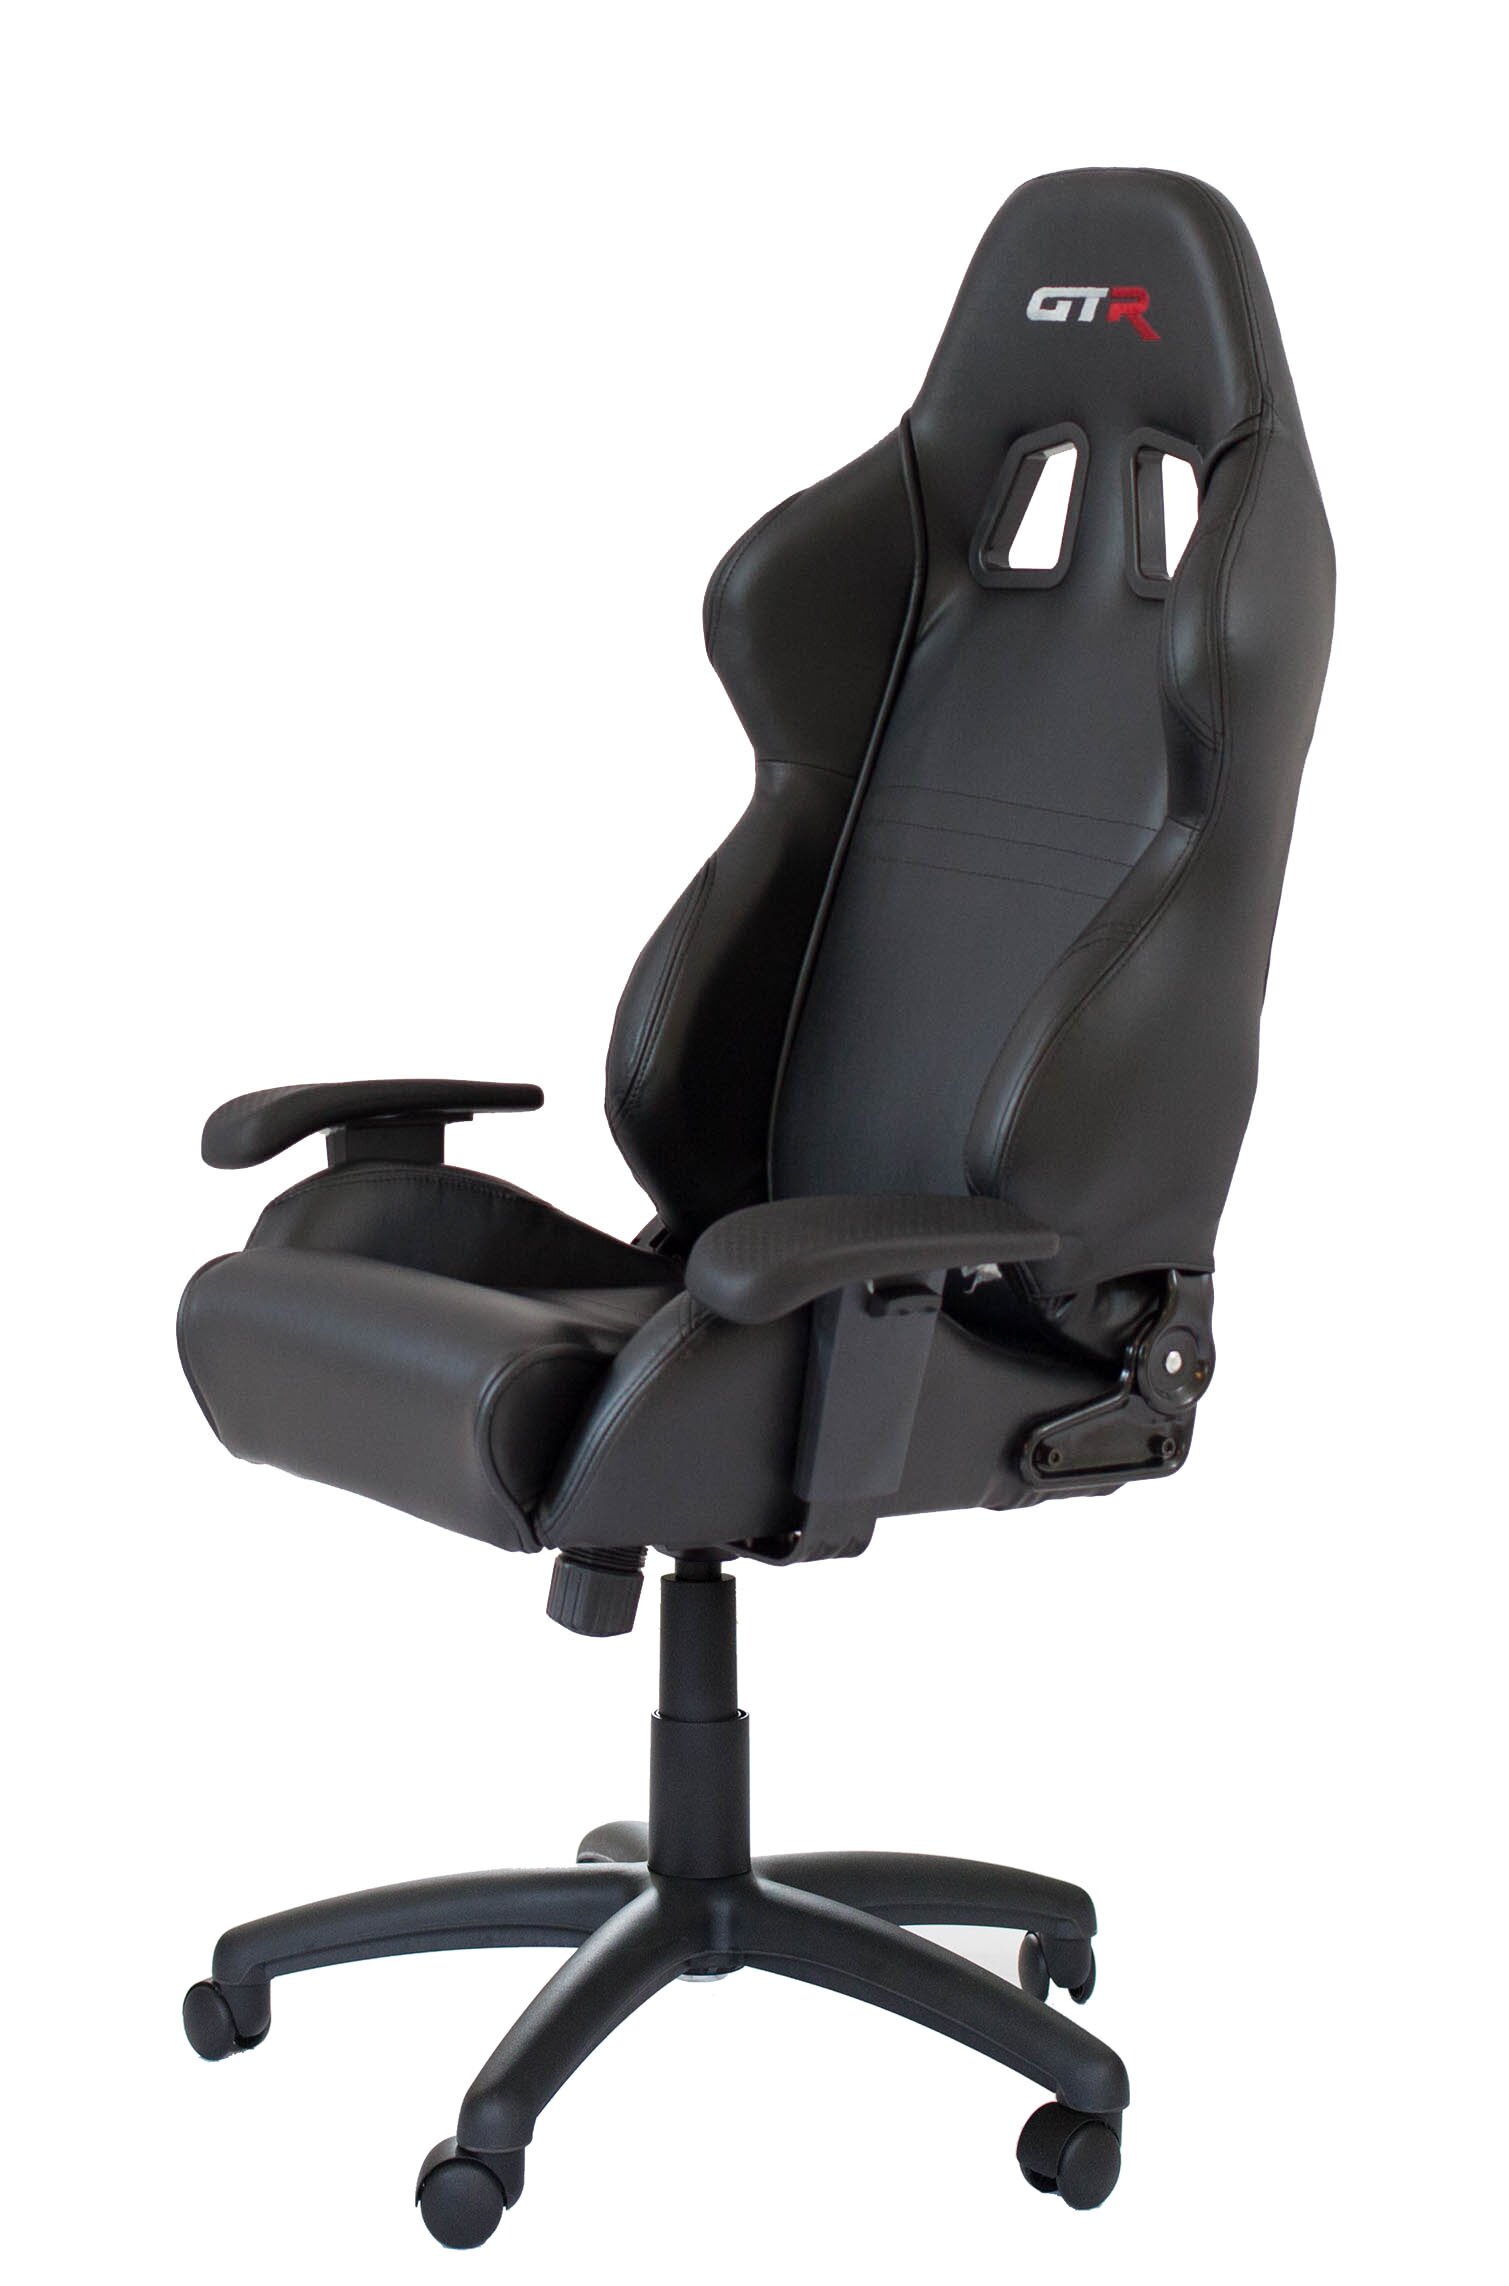 Gtr Simulator Speciale Pc Racing Game Chair Wayfair